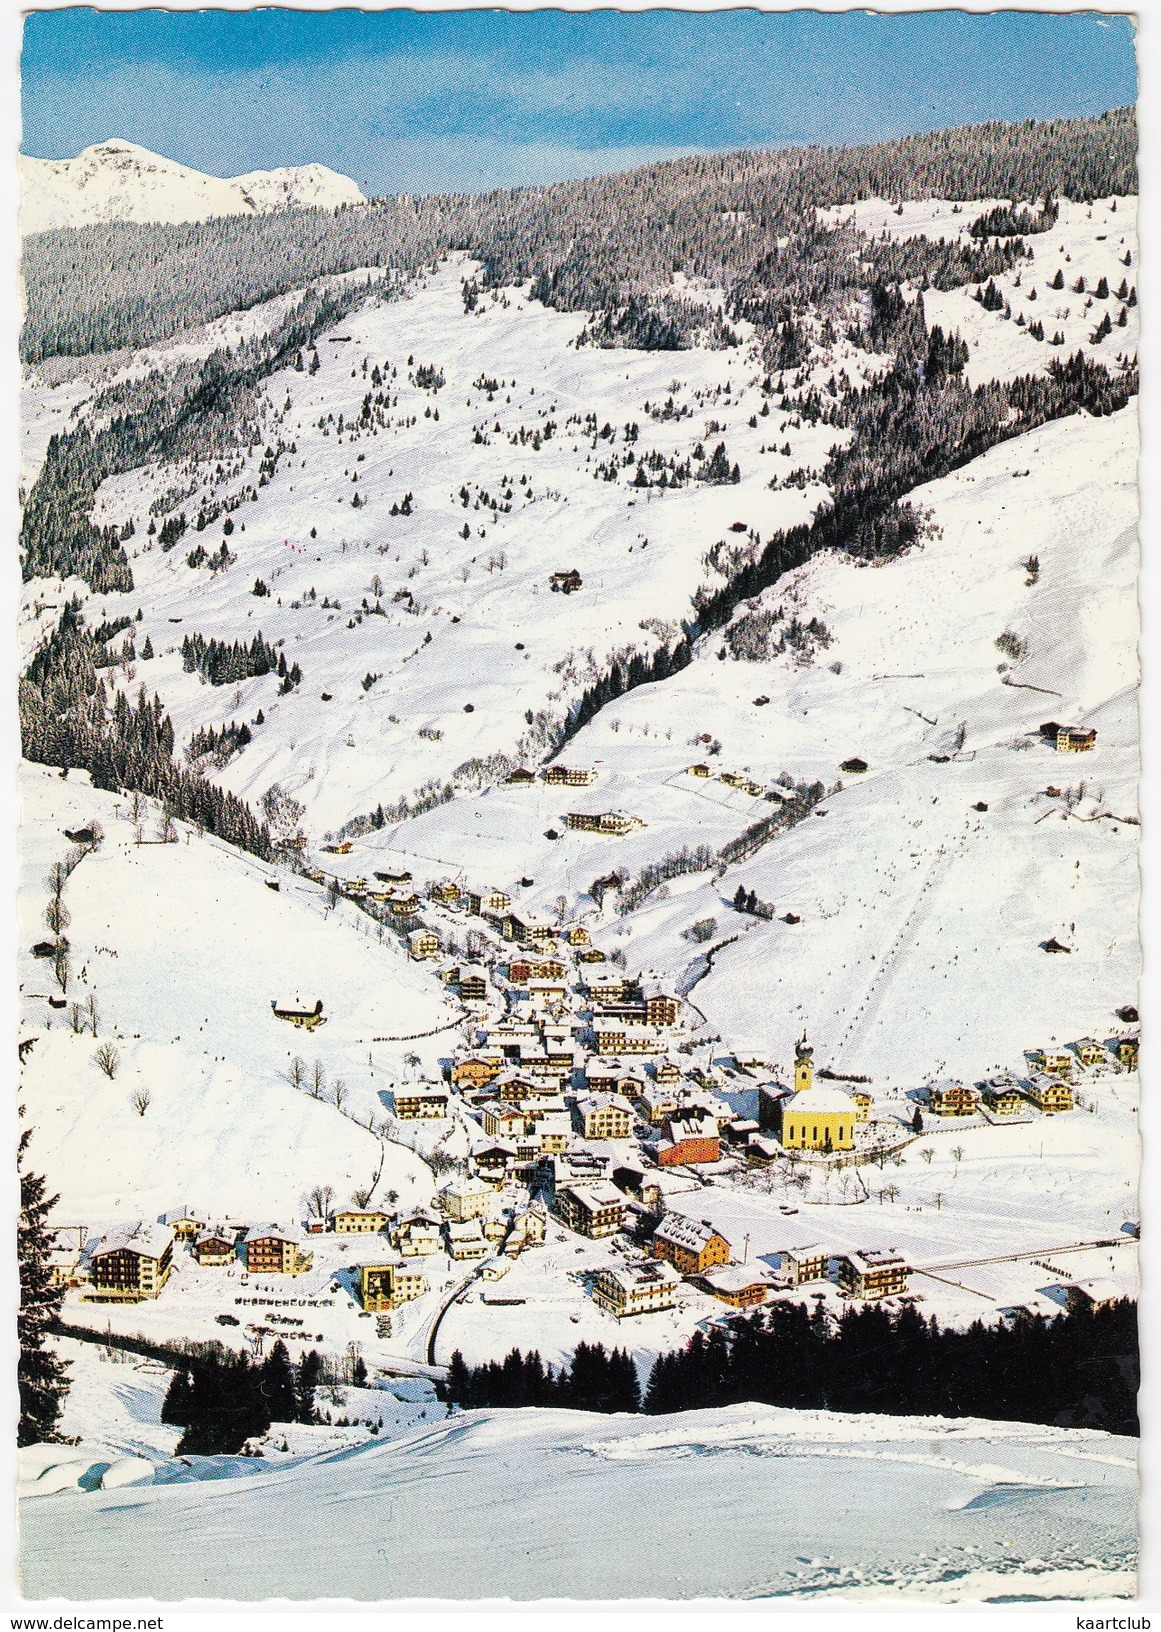 Skidorf Saalbach, 1003 M - Salzburger Land - Austria - Saalbach